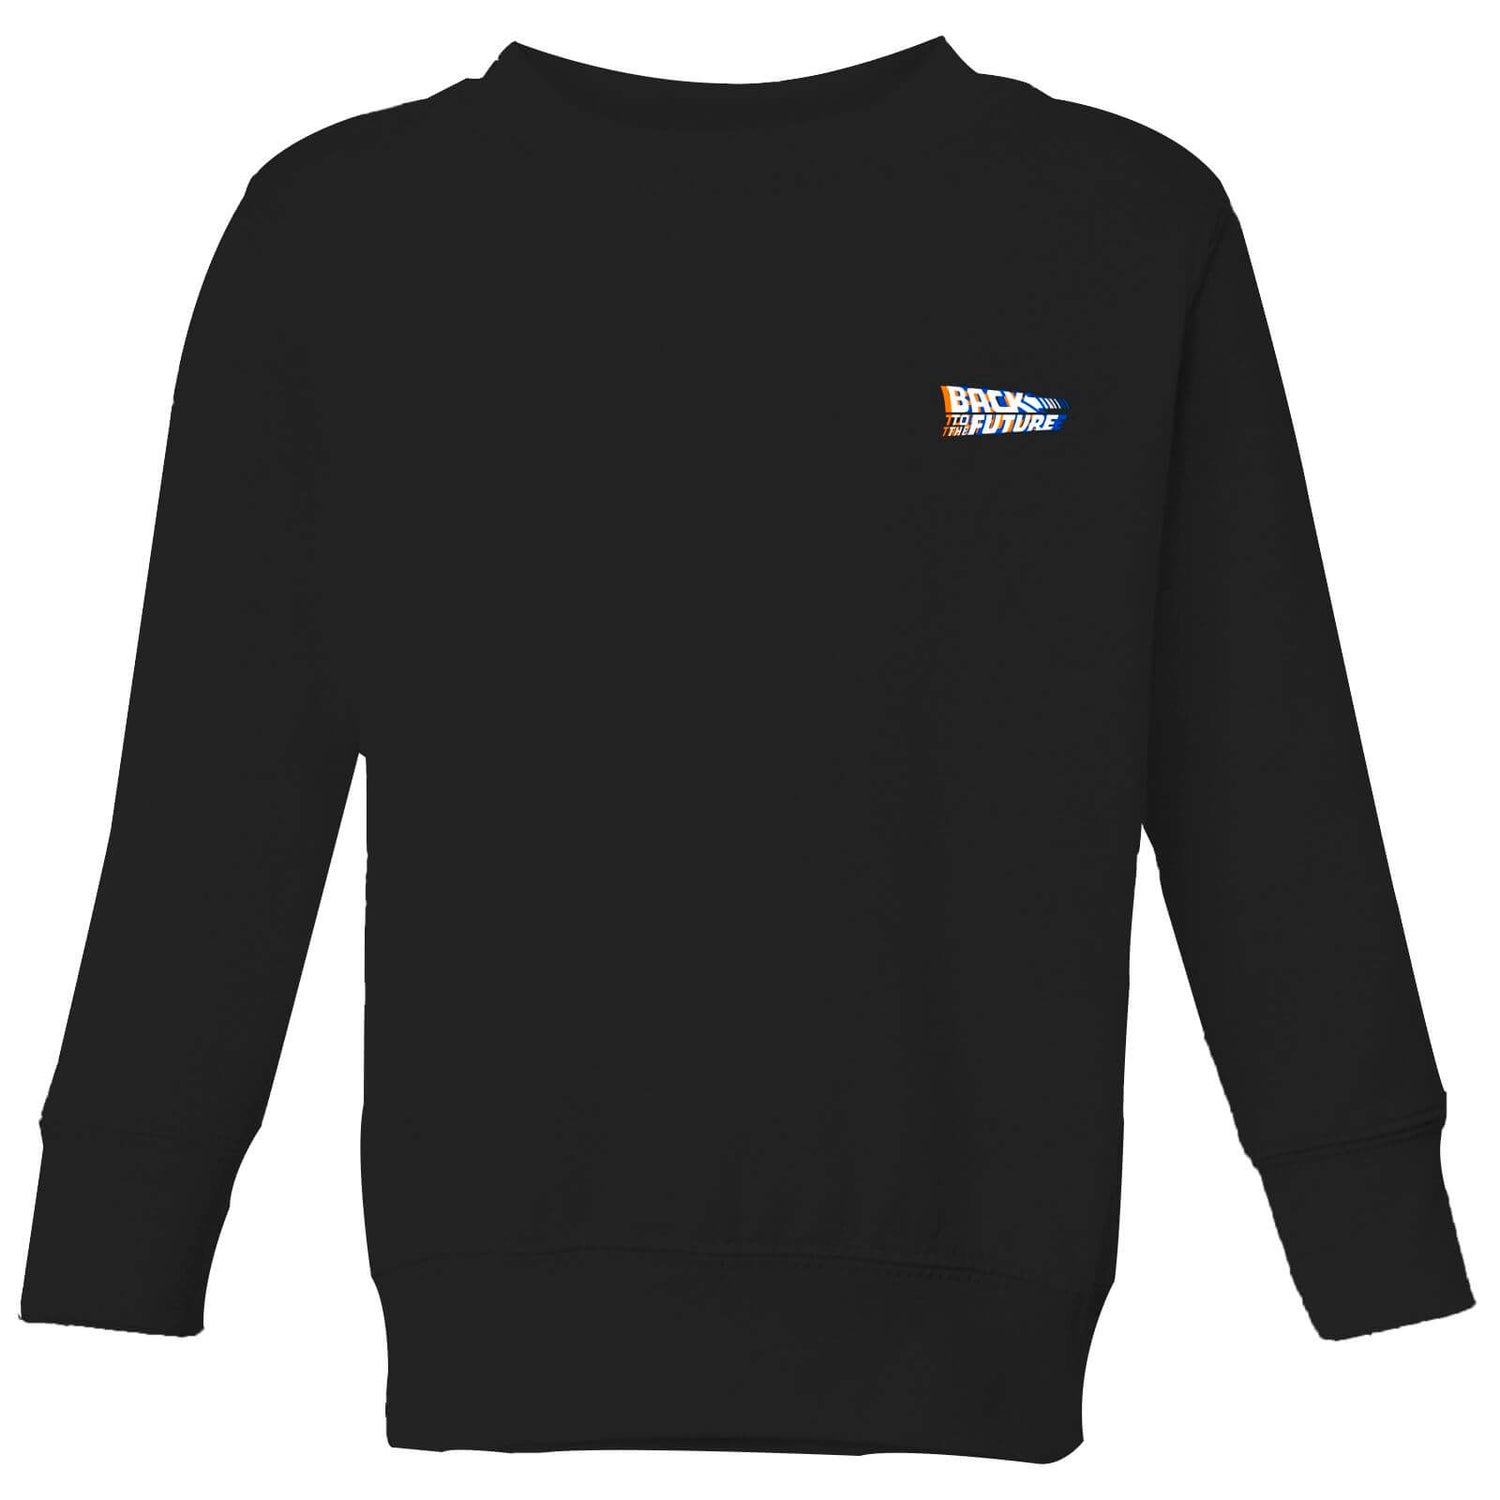 Back To The Future Kids' Sweatshirt - Black